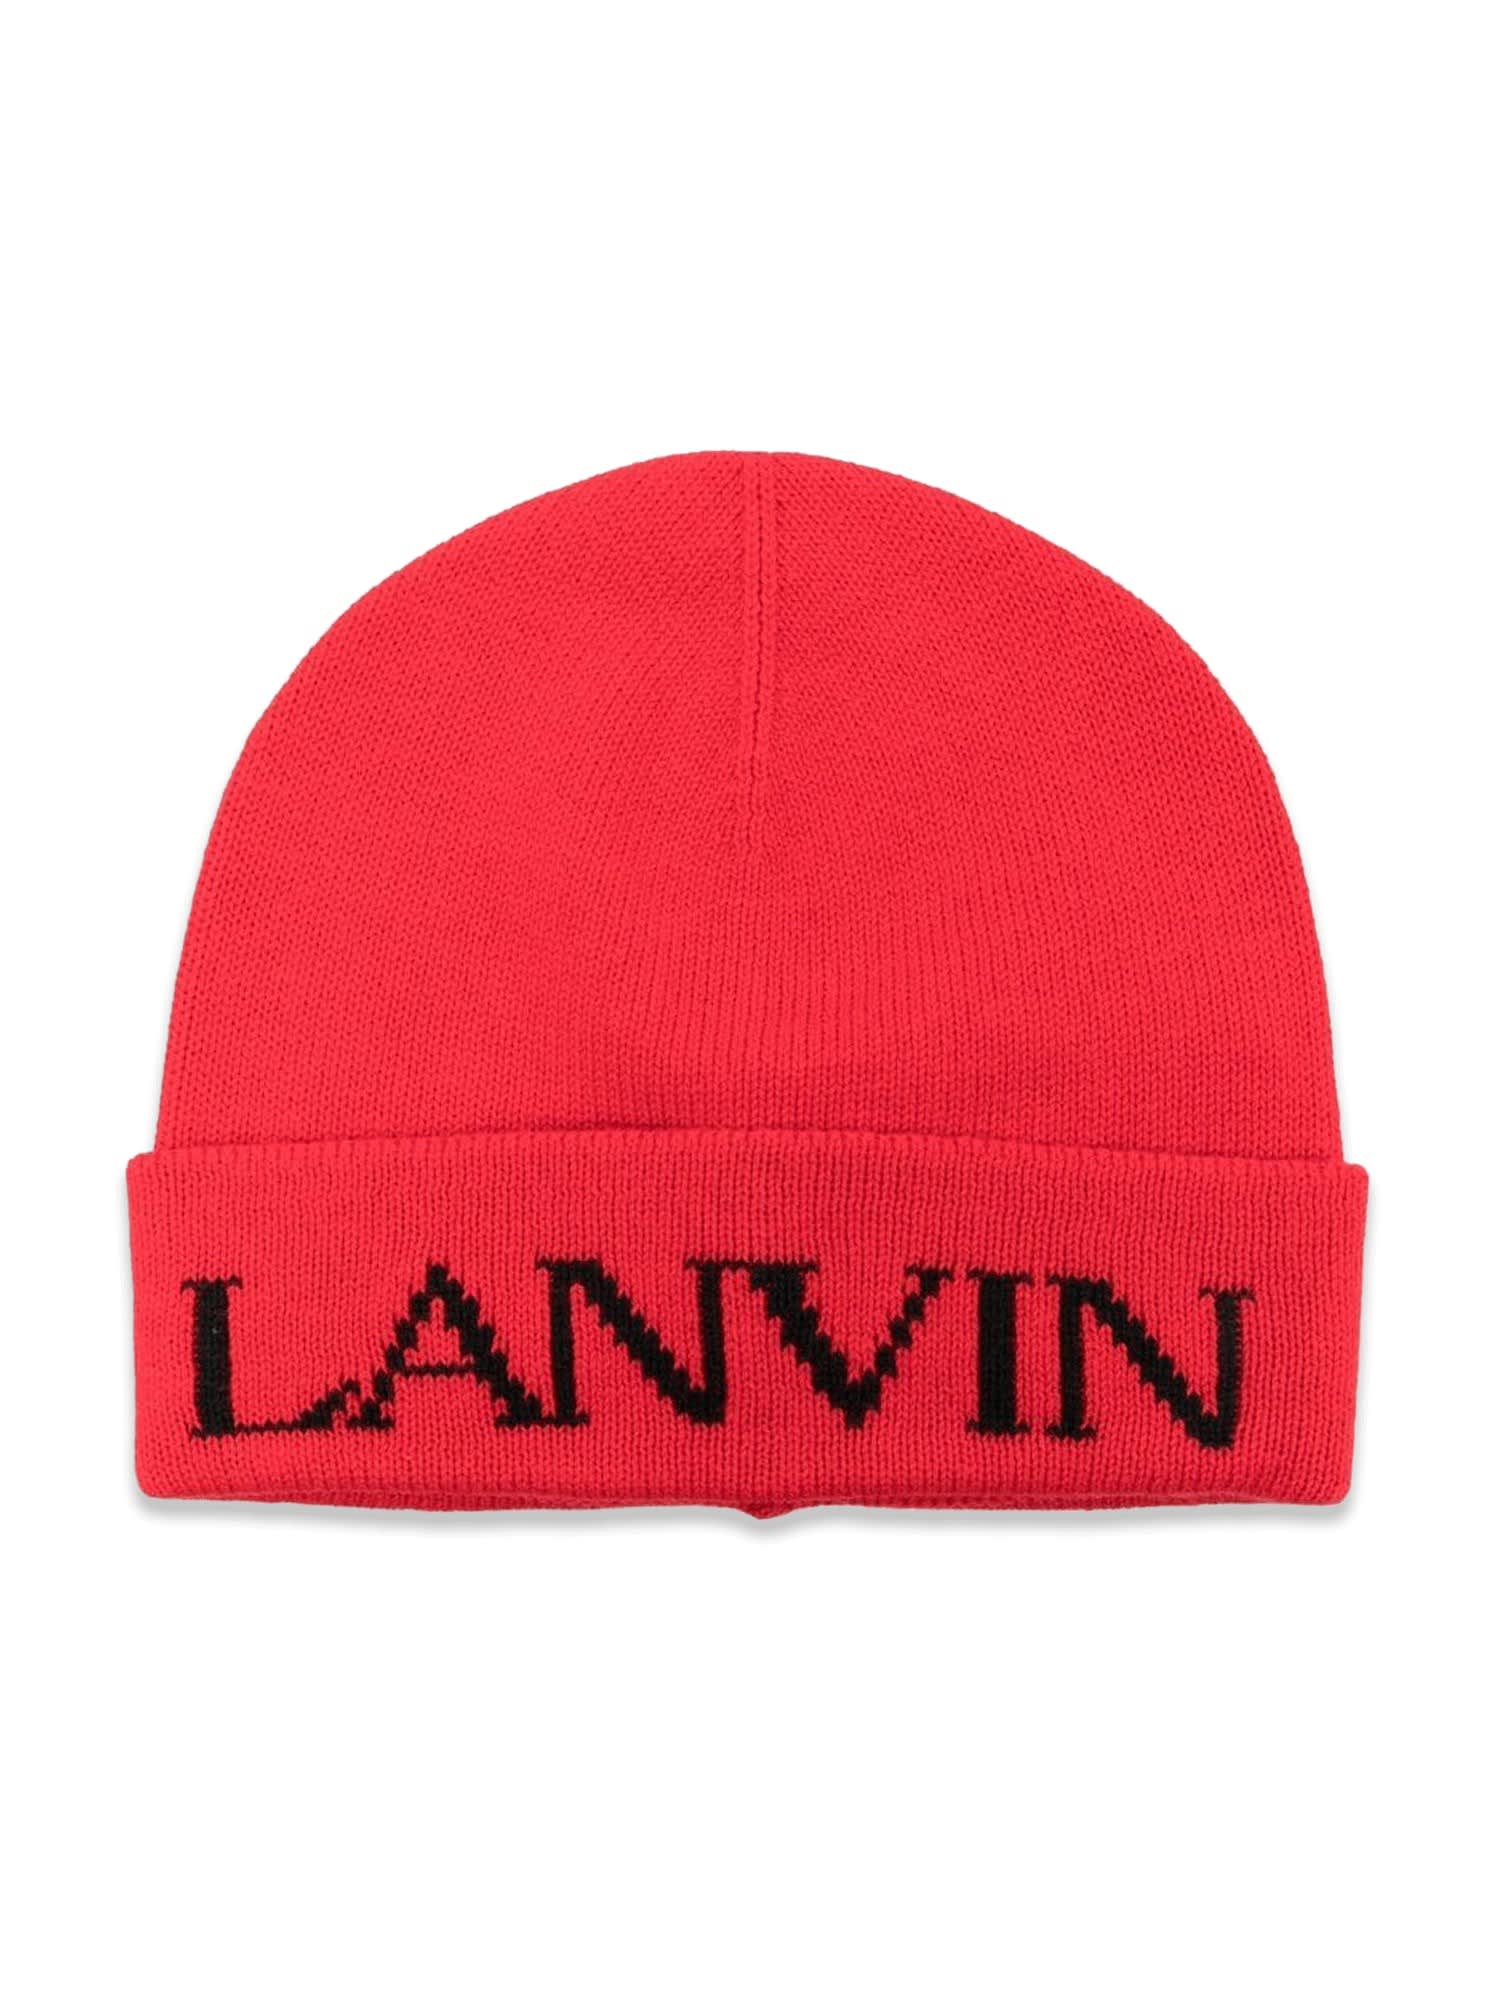 Lanvin Logo Headge.